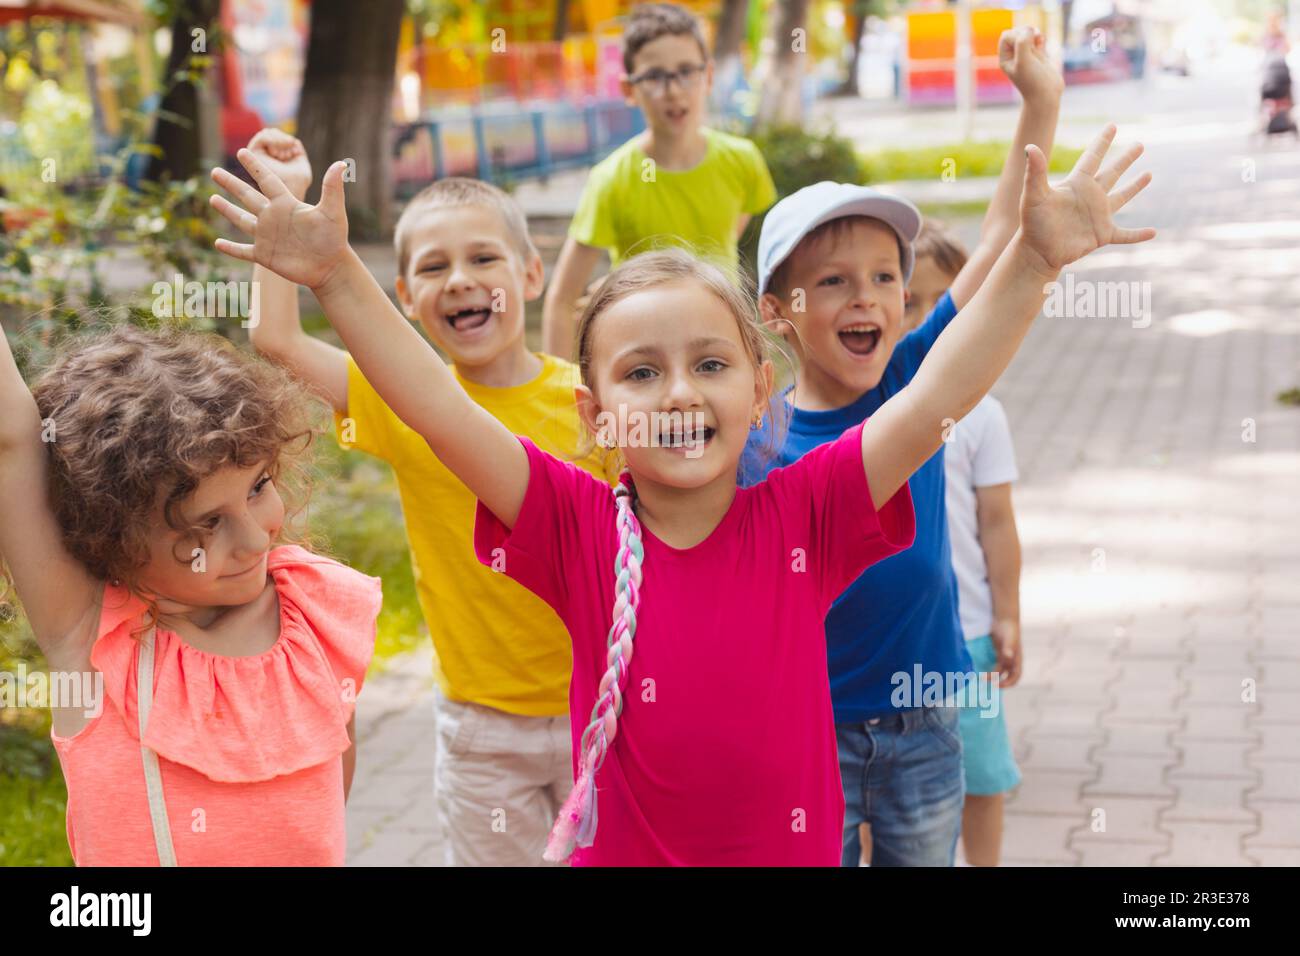 Cheerful emotional children having fun time outdoors Stock Photo